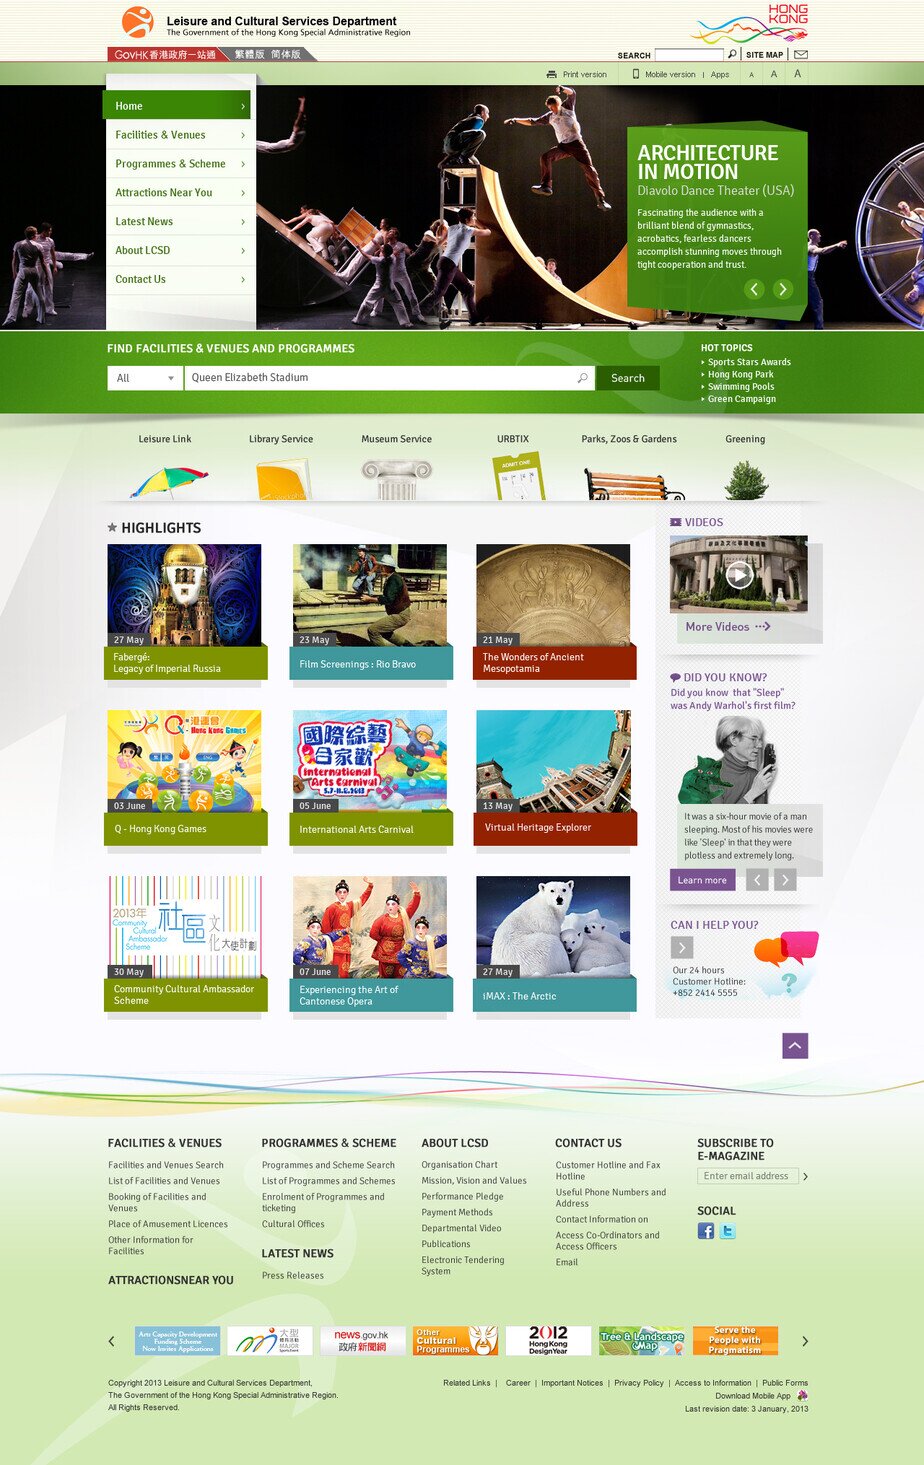 Leisure and Cultural Services Department website screenshot for desktop version 1 of 9